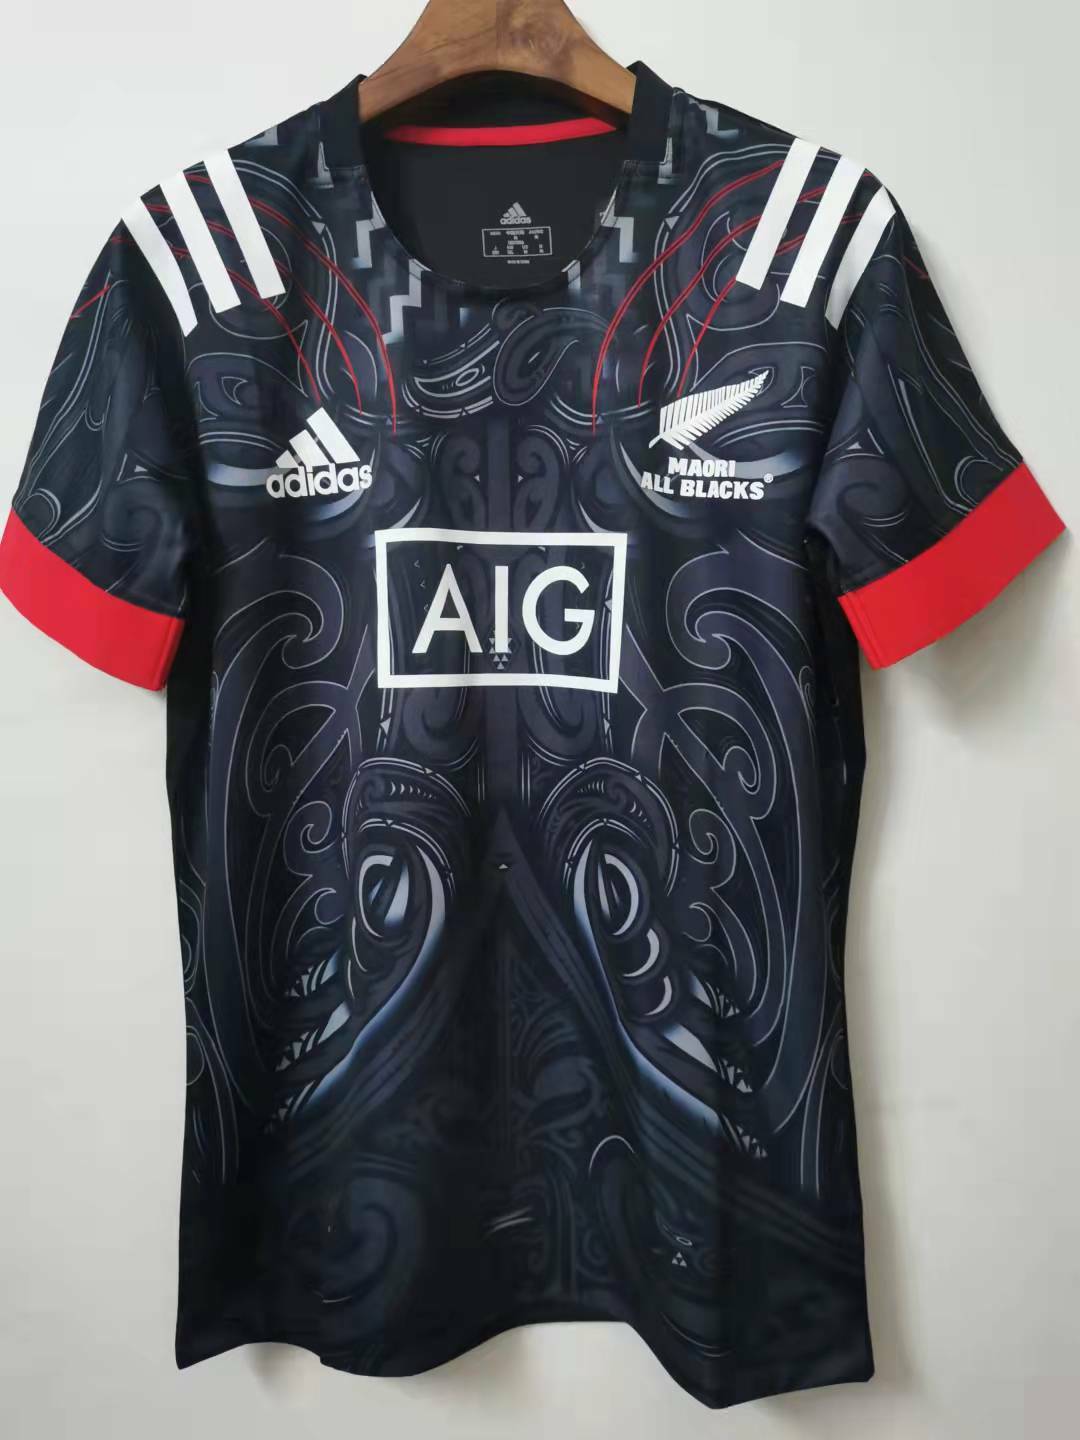 New Zealand All Blacks 2020/2021 rugby jersey shirt S-3XL